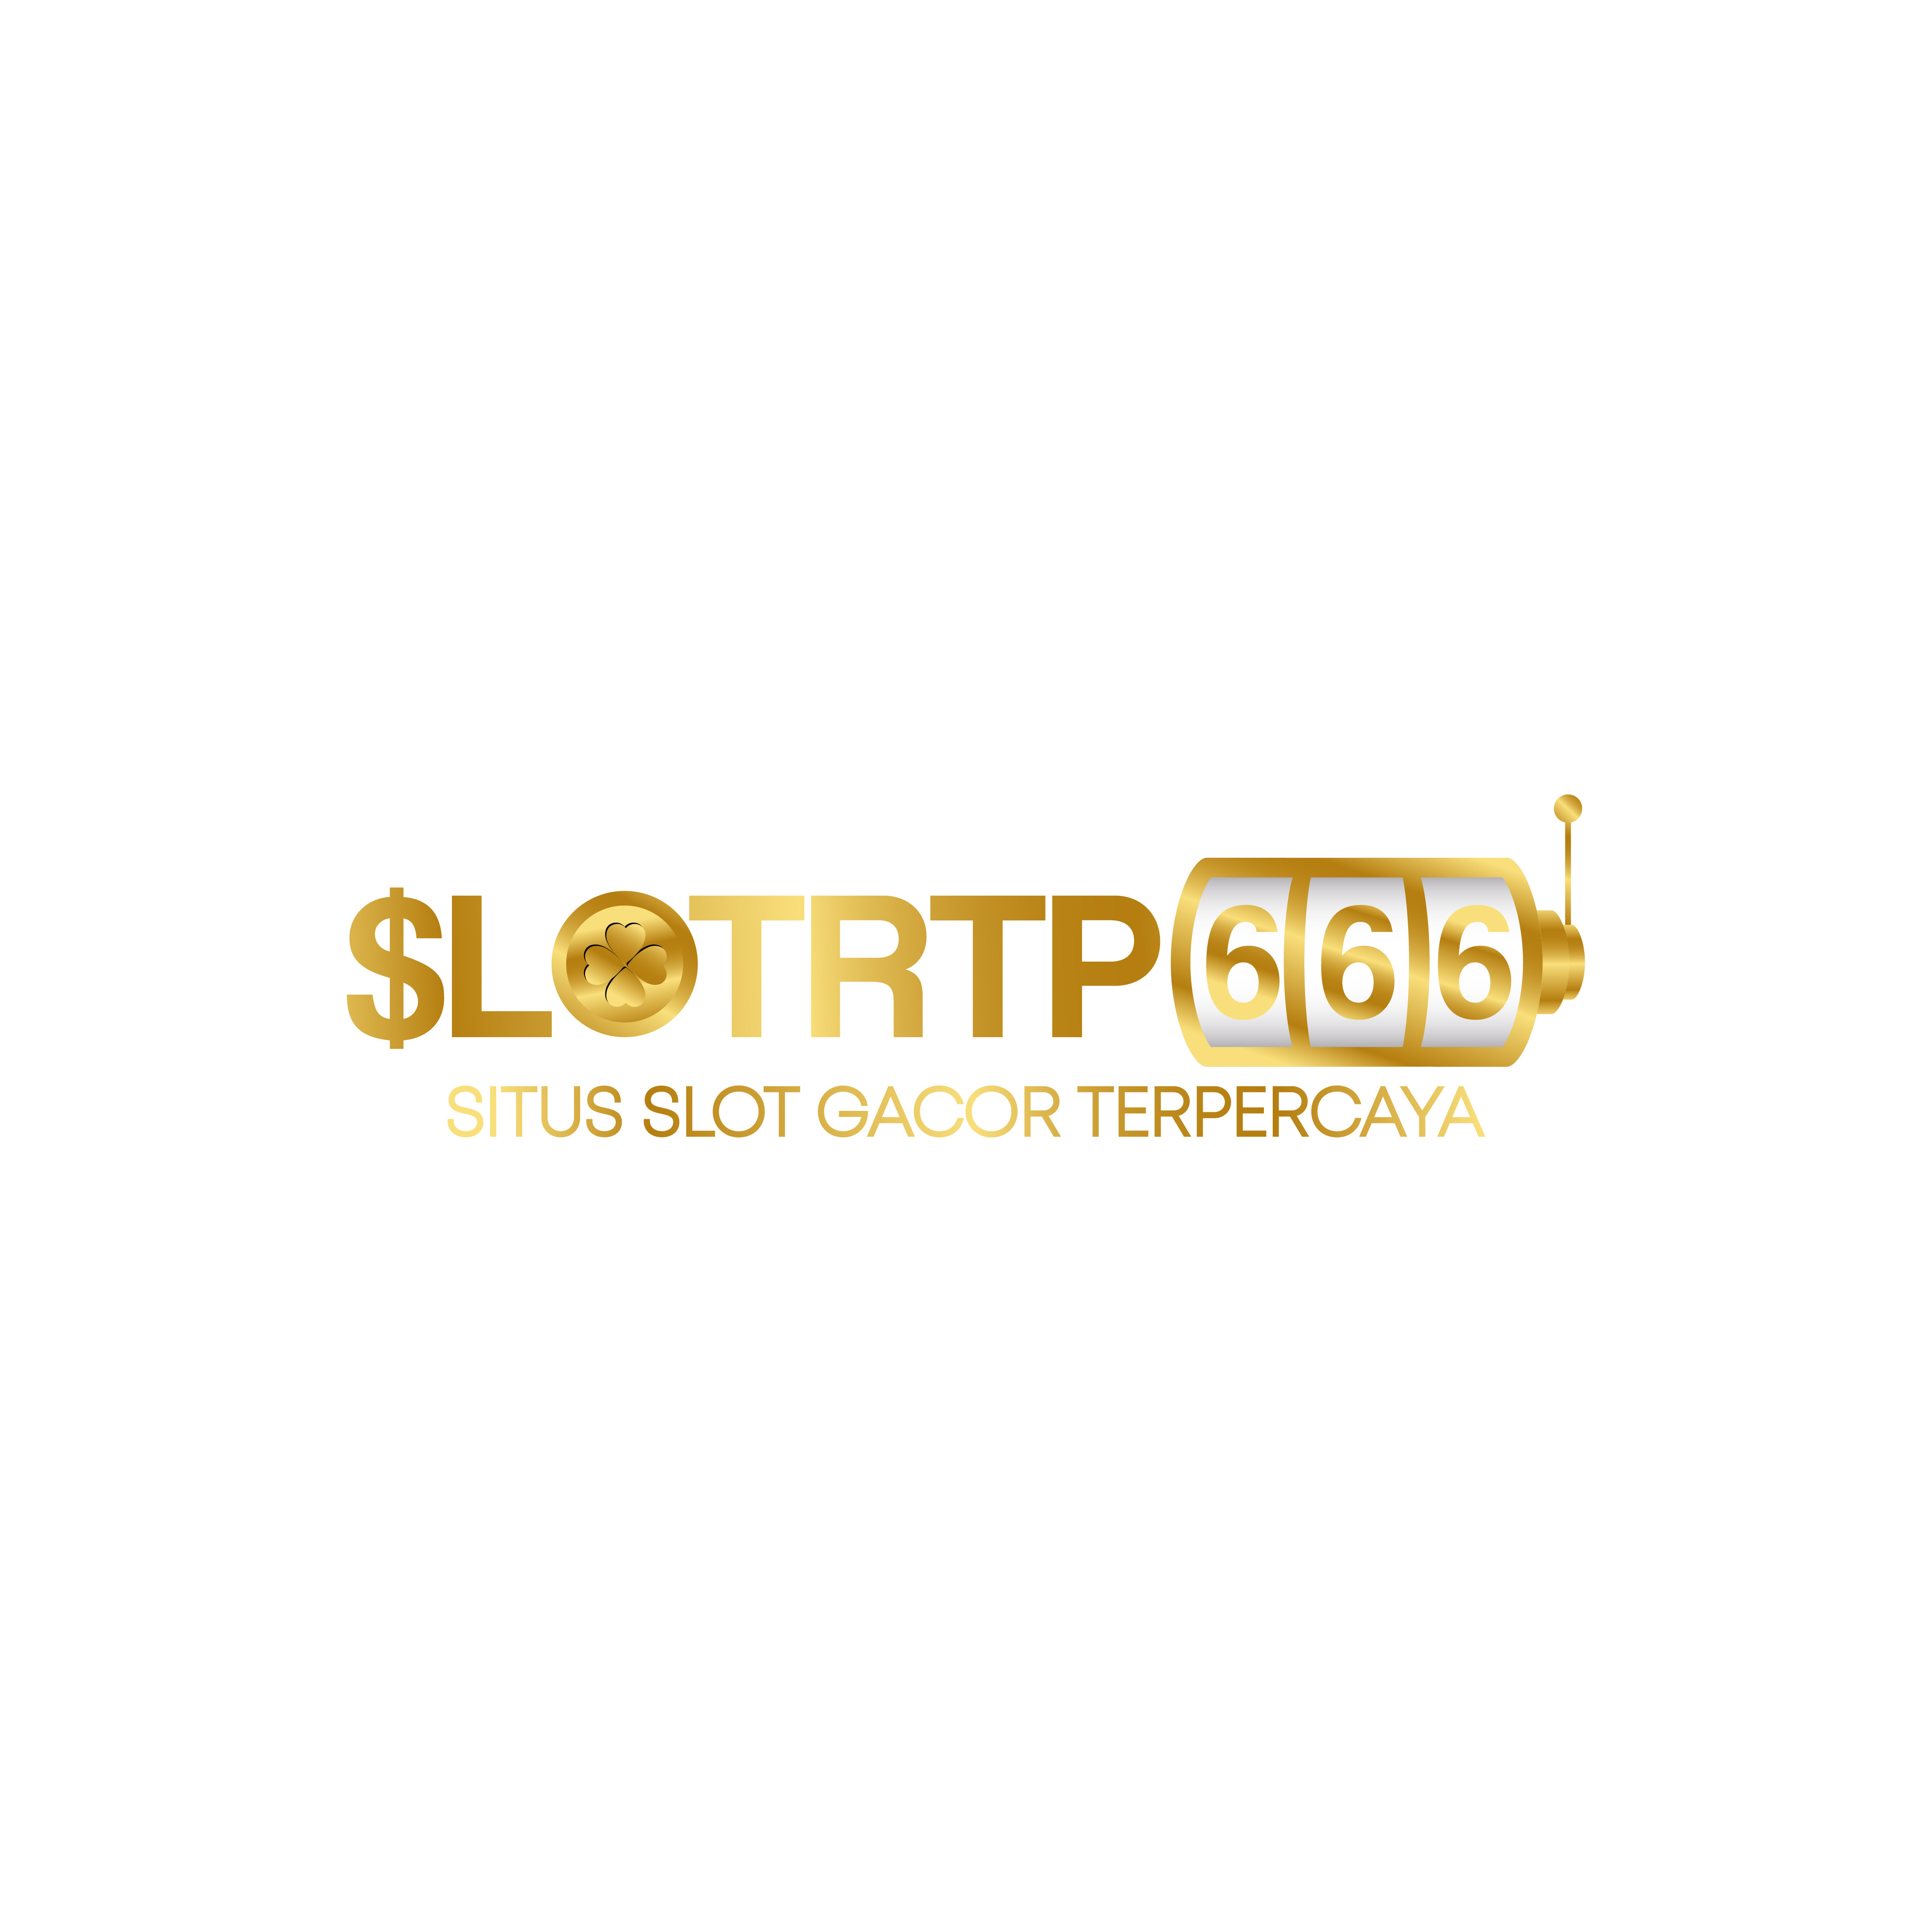 SlotRTP666 Logo